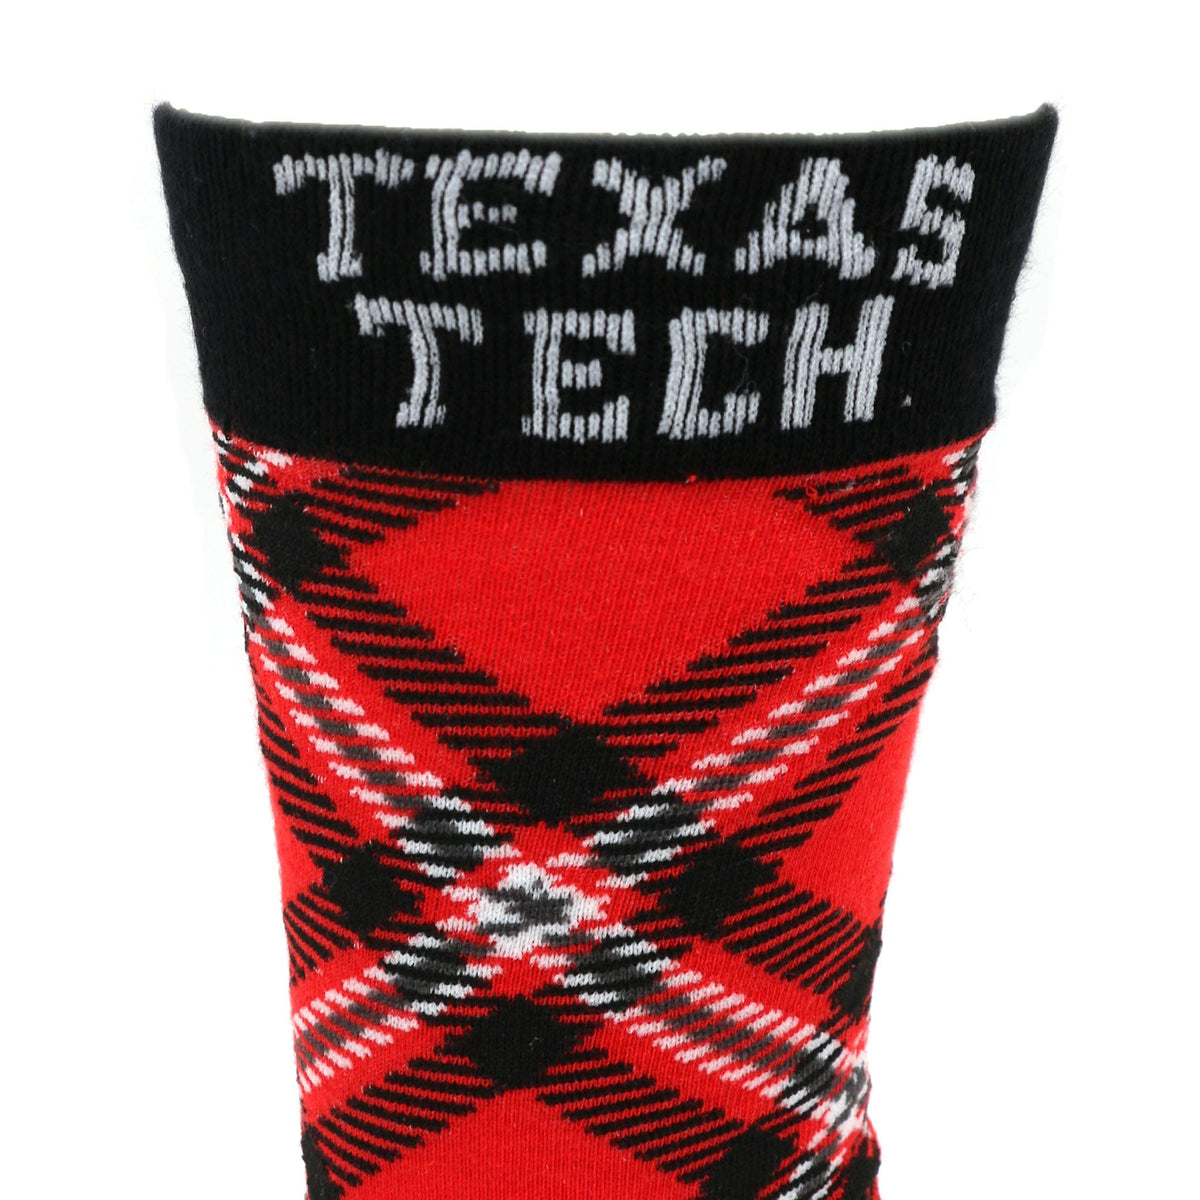 Timeless Tartans Socks Texas Tech Tartan Socks